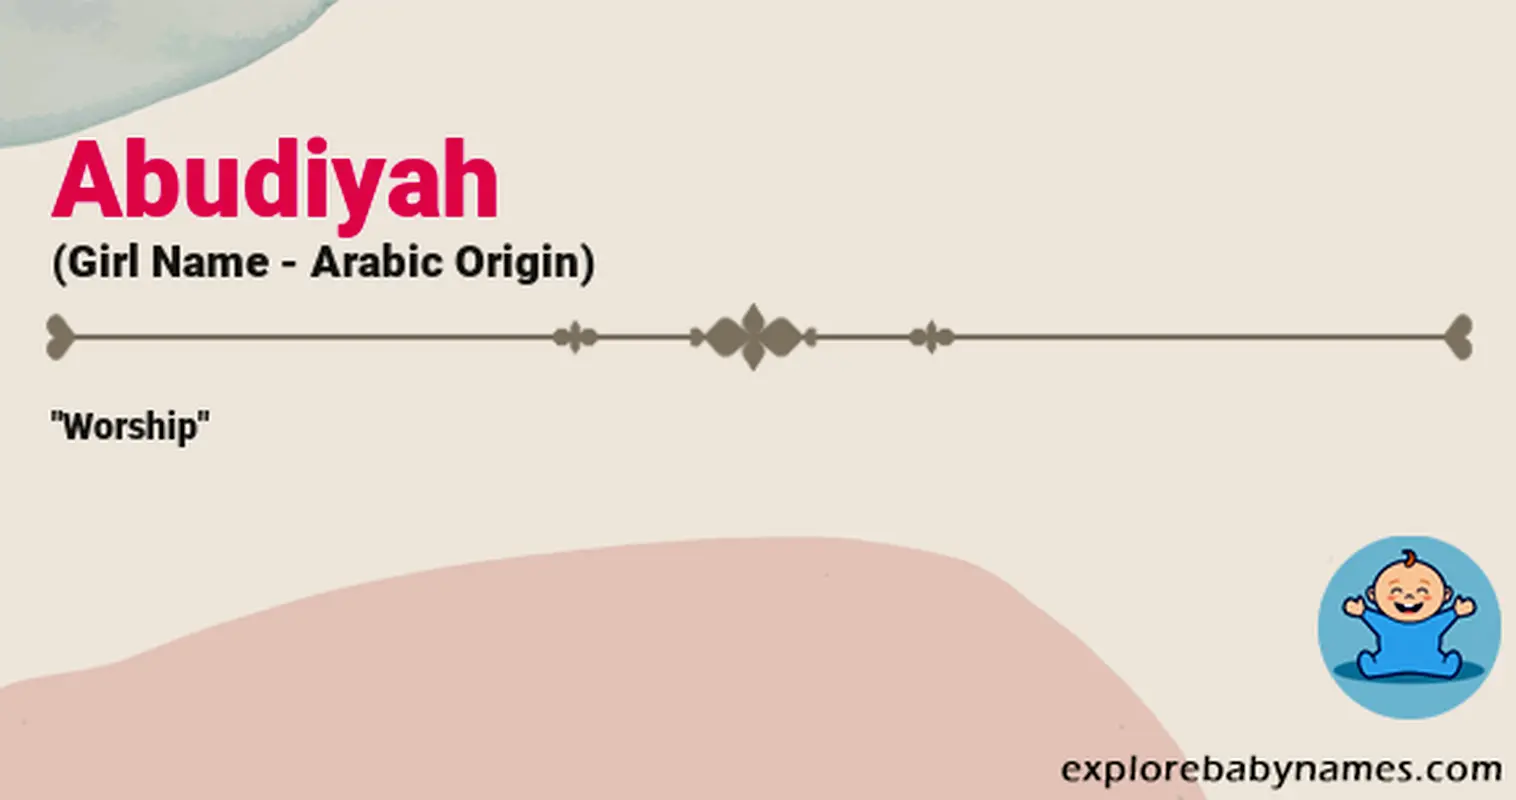 Meaning of Abudiyah